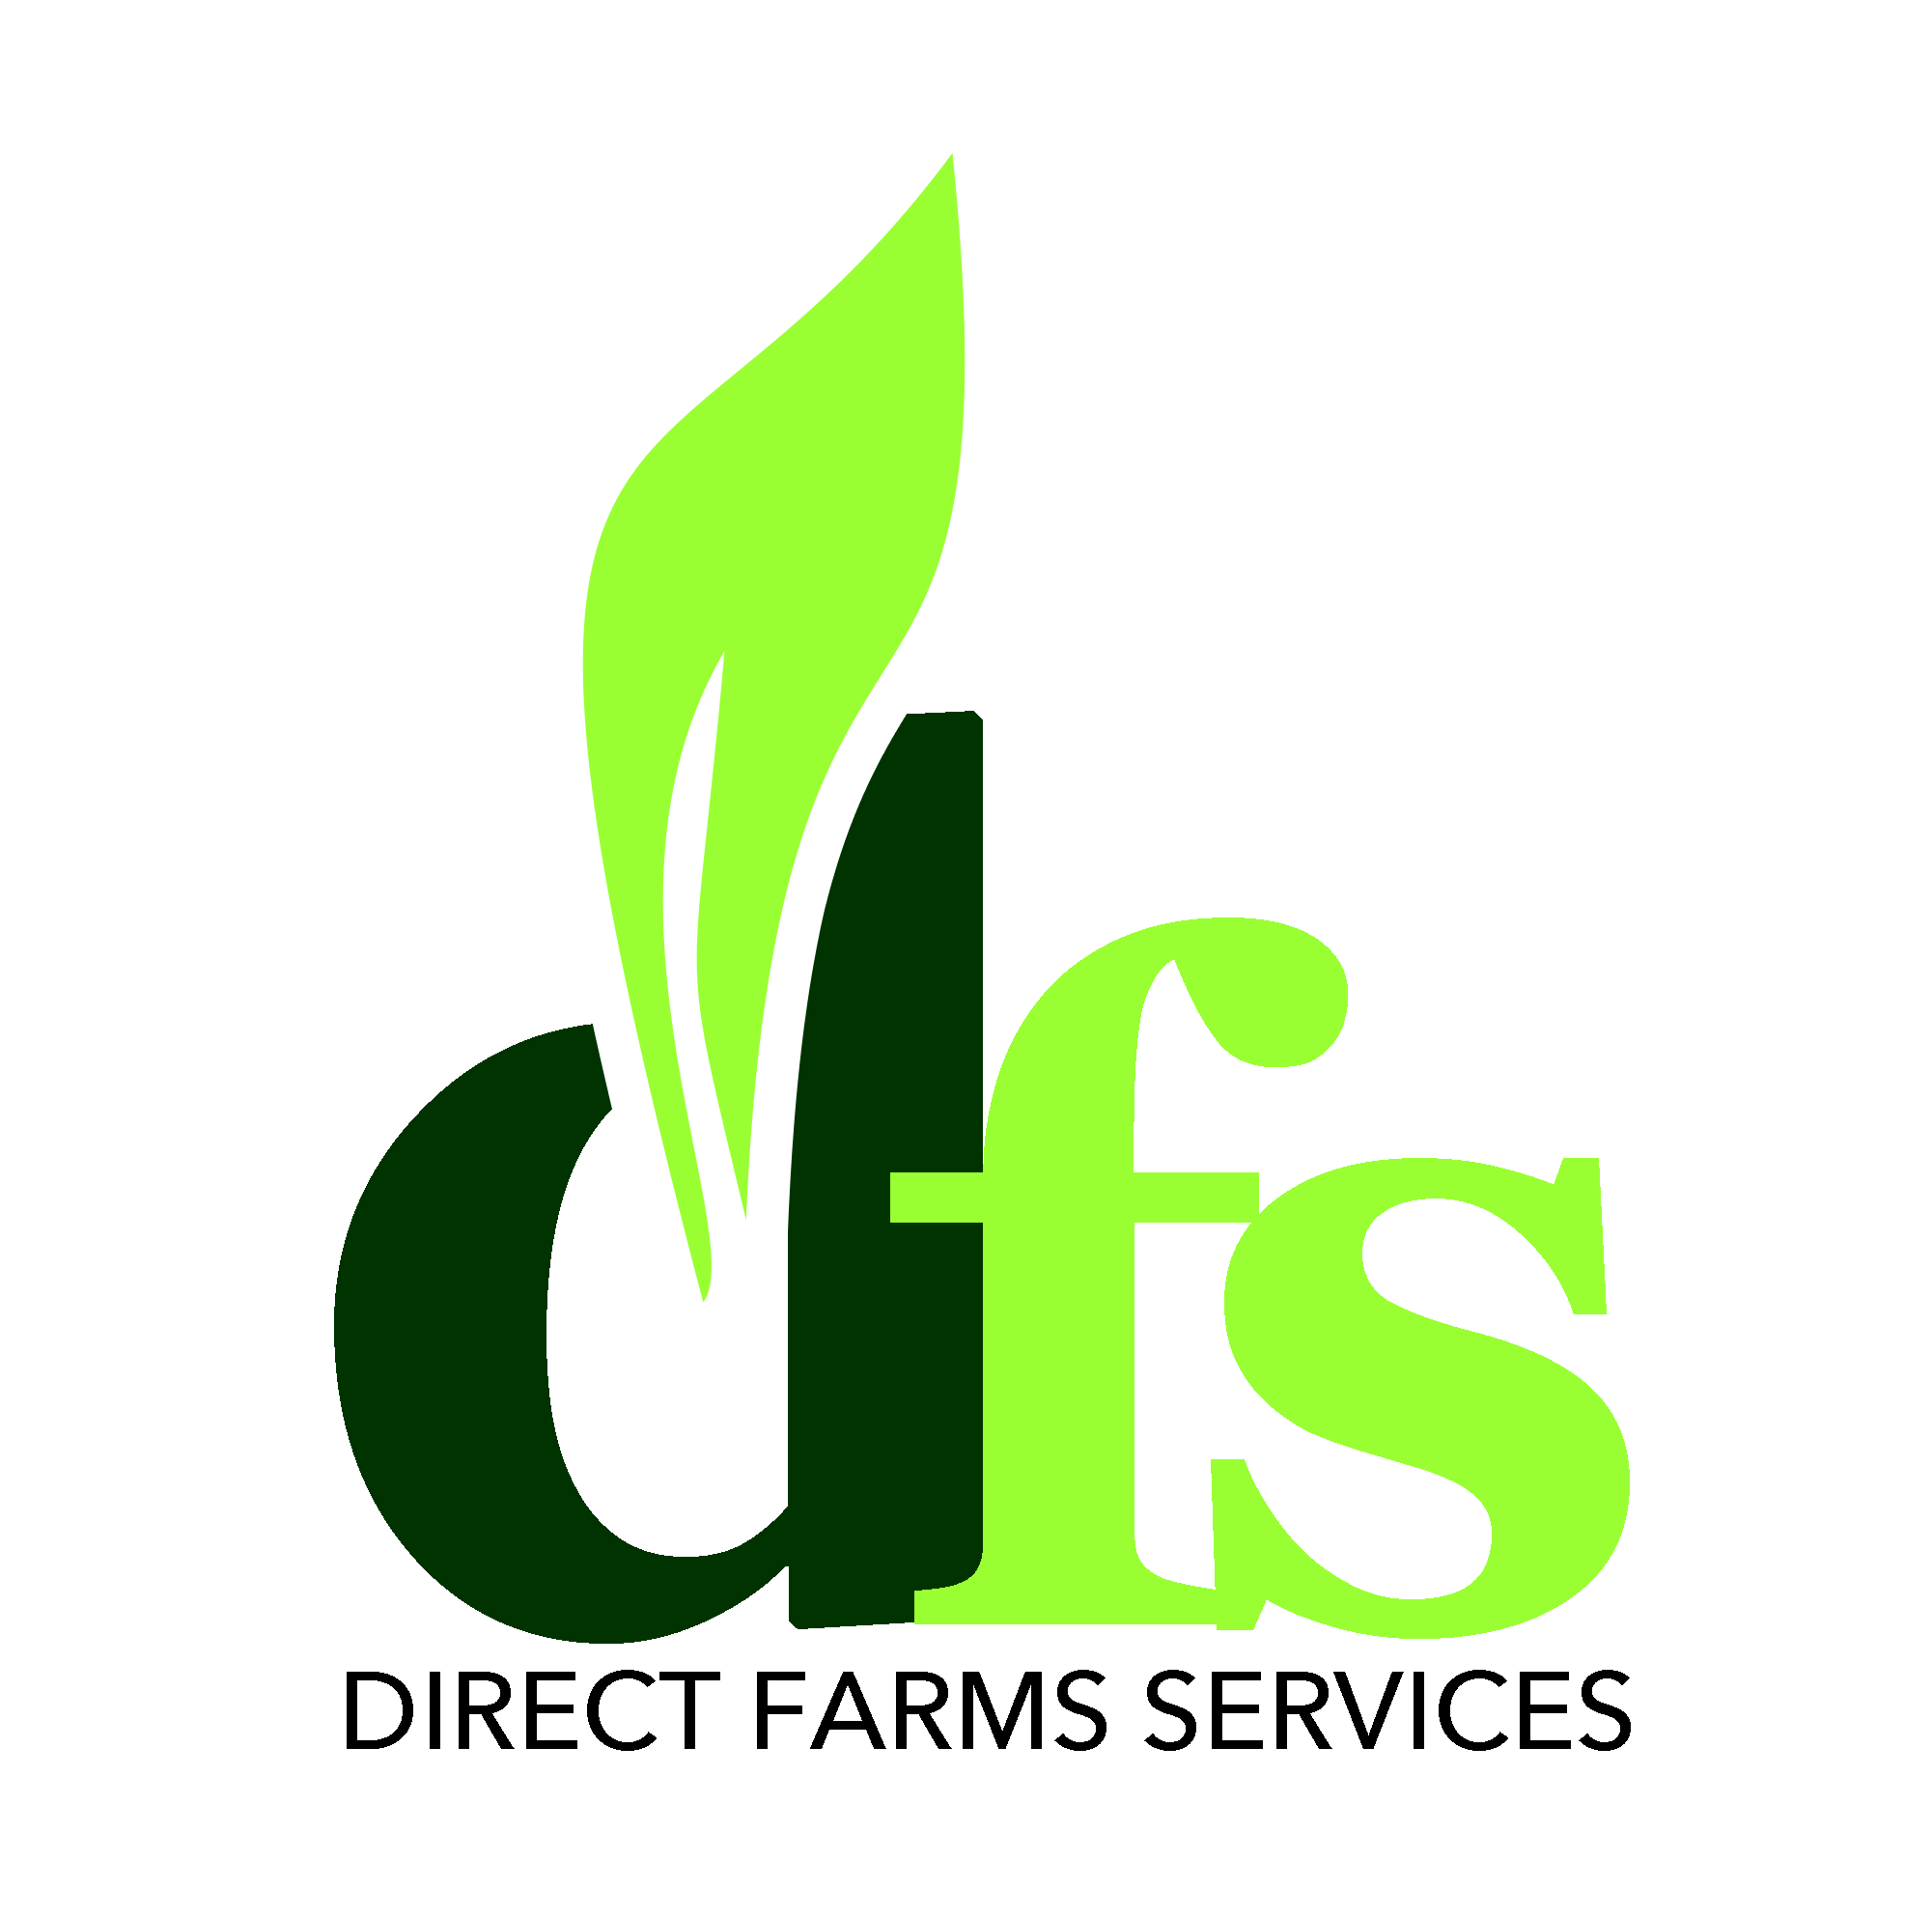 Direct Farm Services